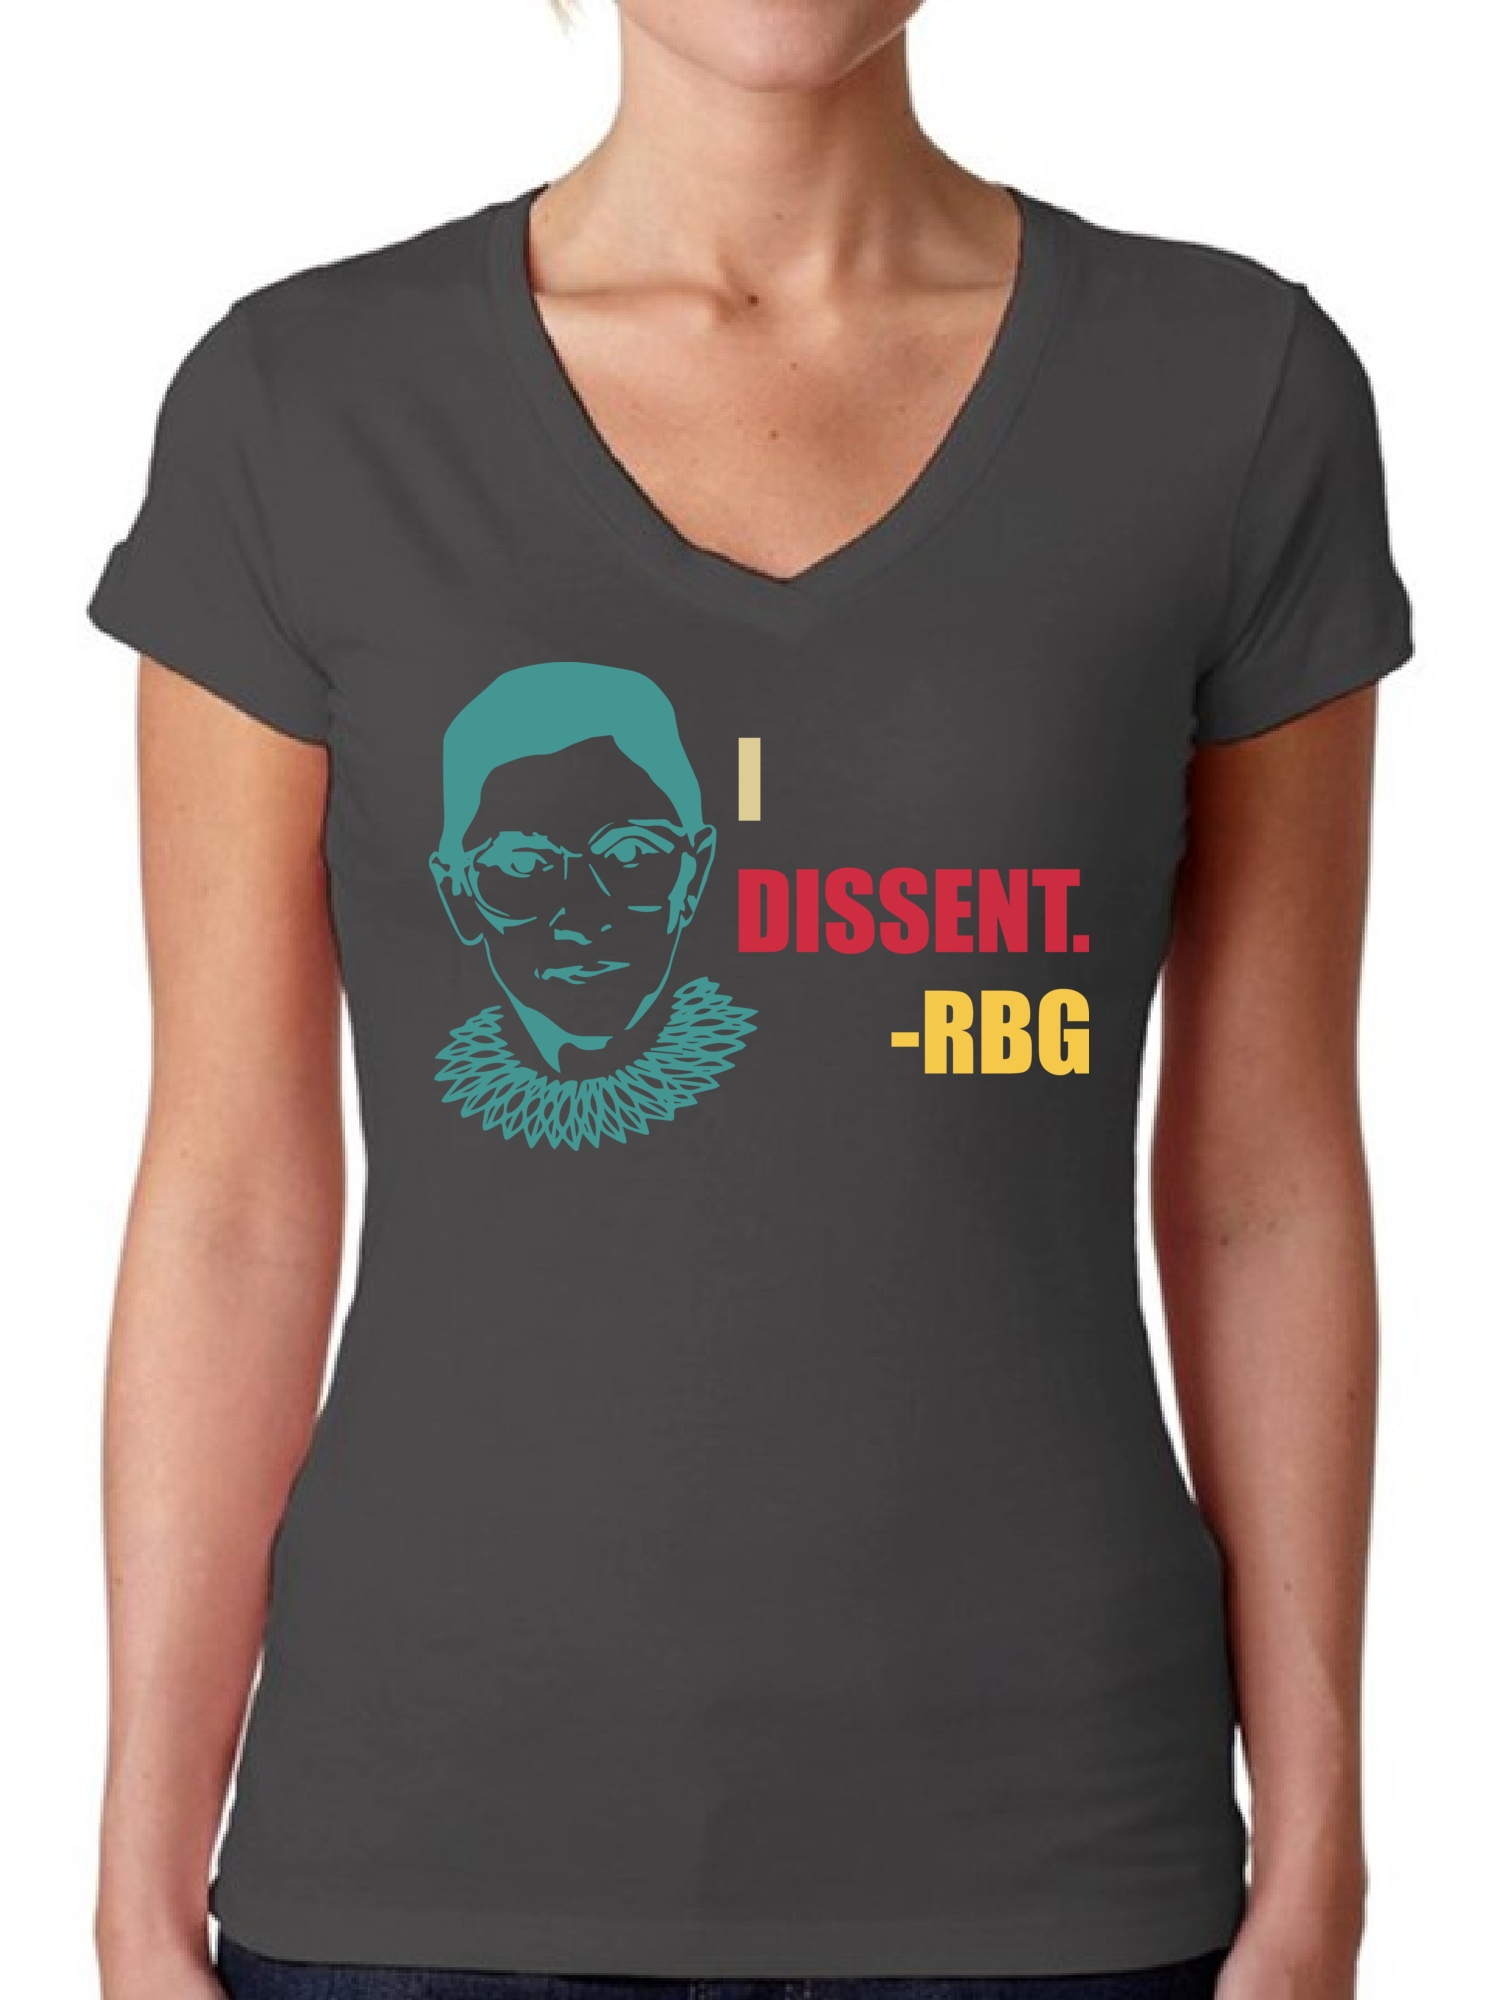 Awkward Styles Ruth Bader Ginsburg Shirt for Women Dissent RBG Notorious V-neck Shirt RBG T Shirt Ladies Support Women Empowerment V neck T-shirt - image 1 of 4